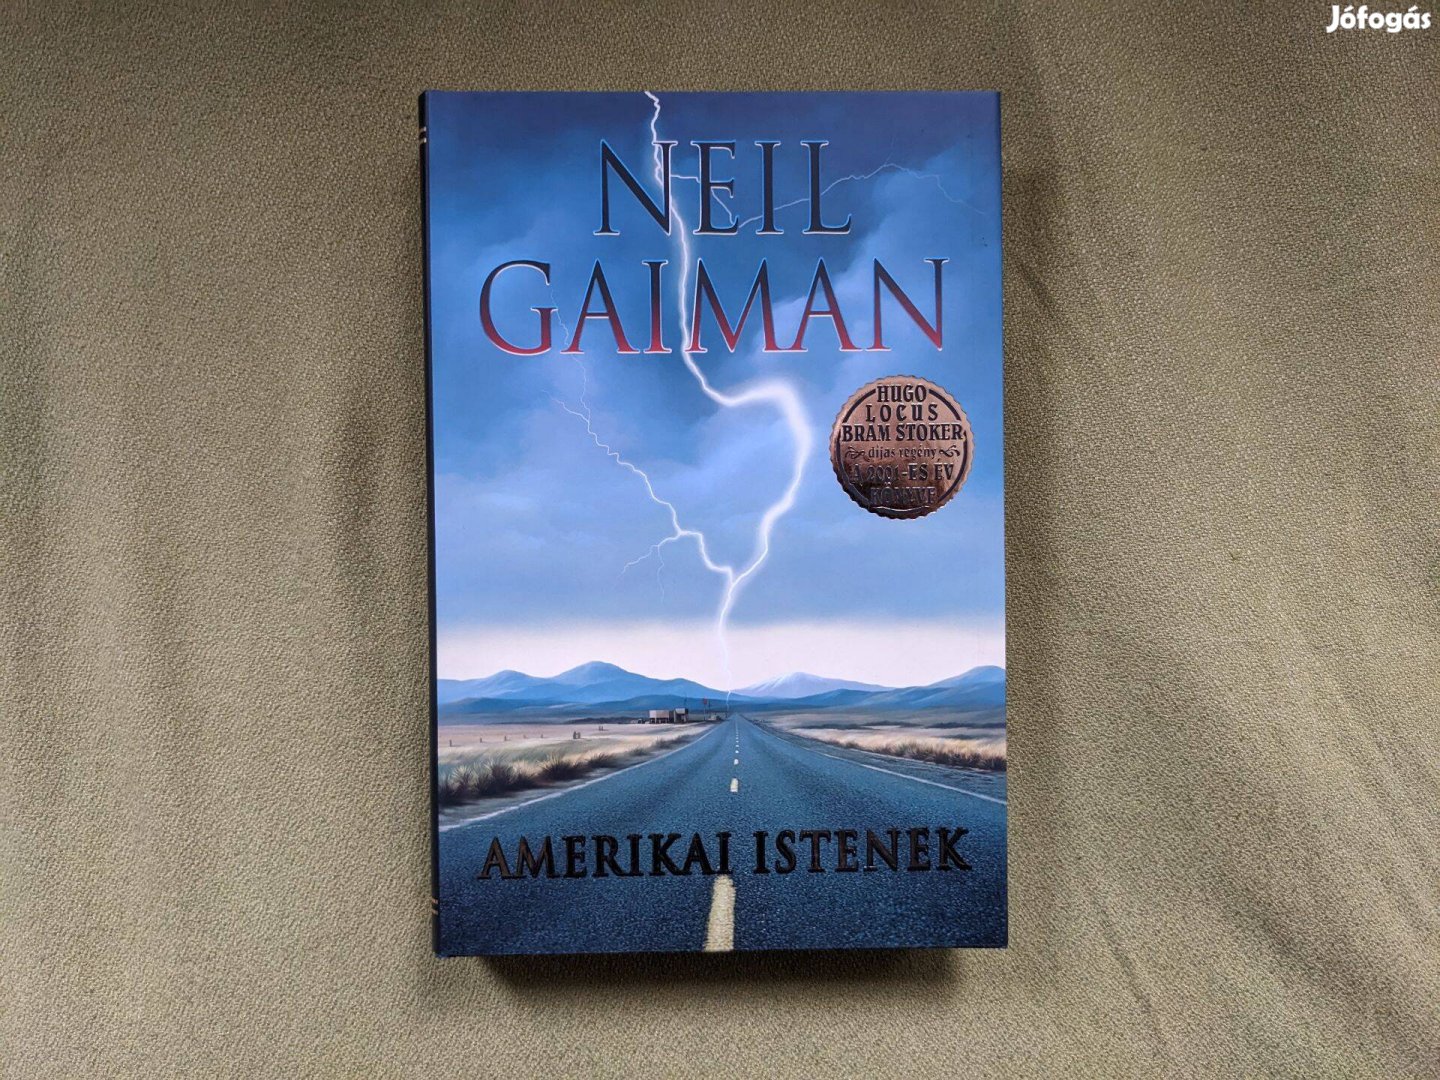 Neil Gaiman: Amerikai istenek